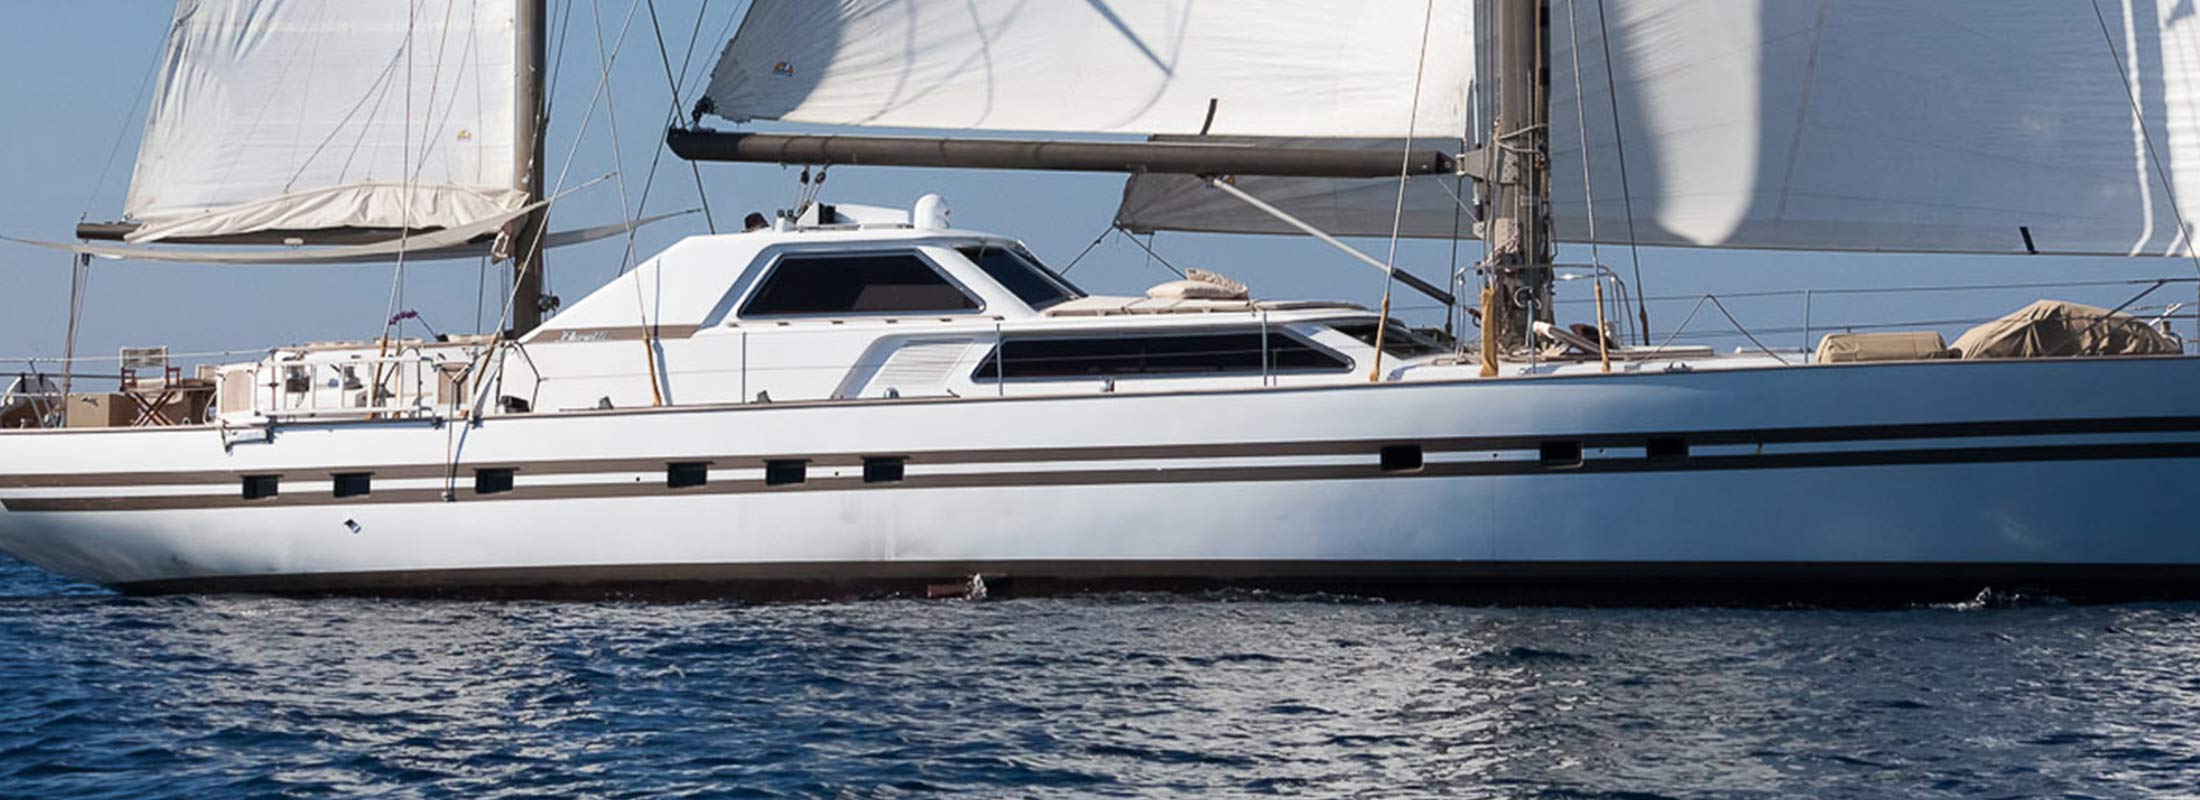 Geepee Motor Yacht for Charter Mediterranean slider 1